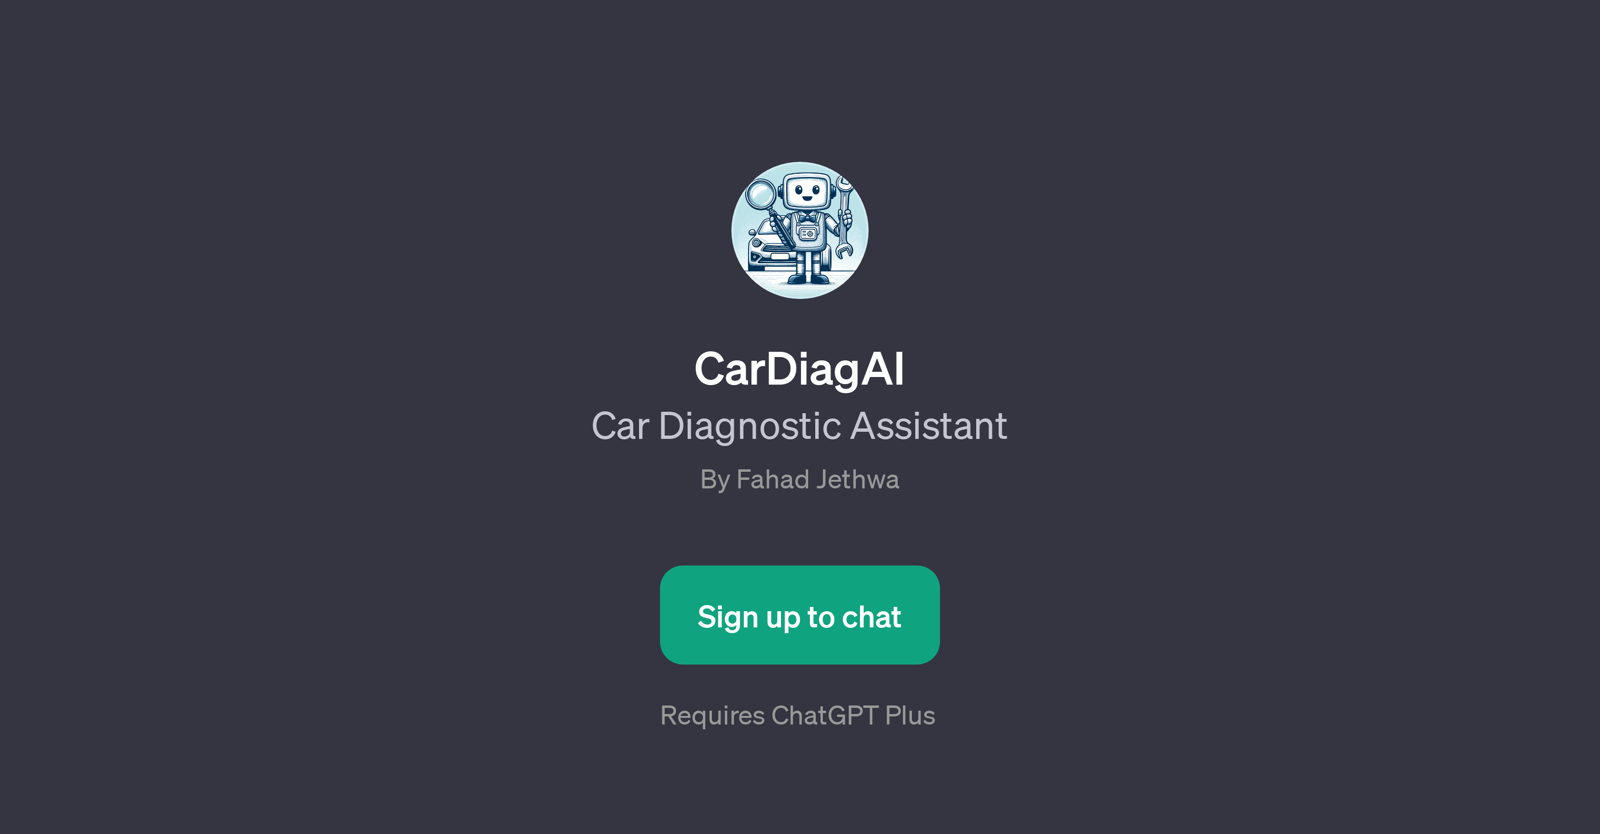 CarDiagAI website